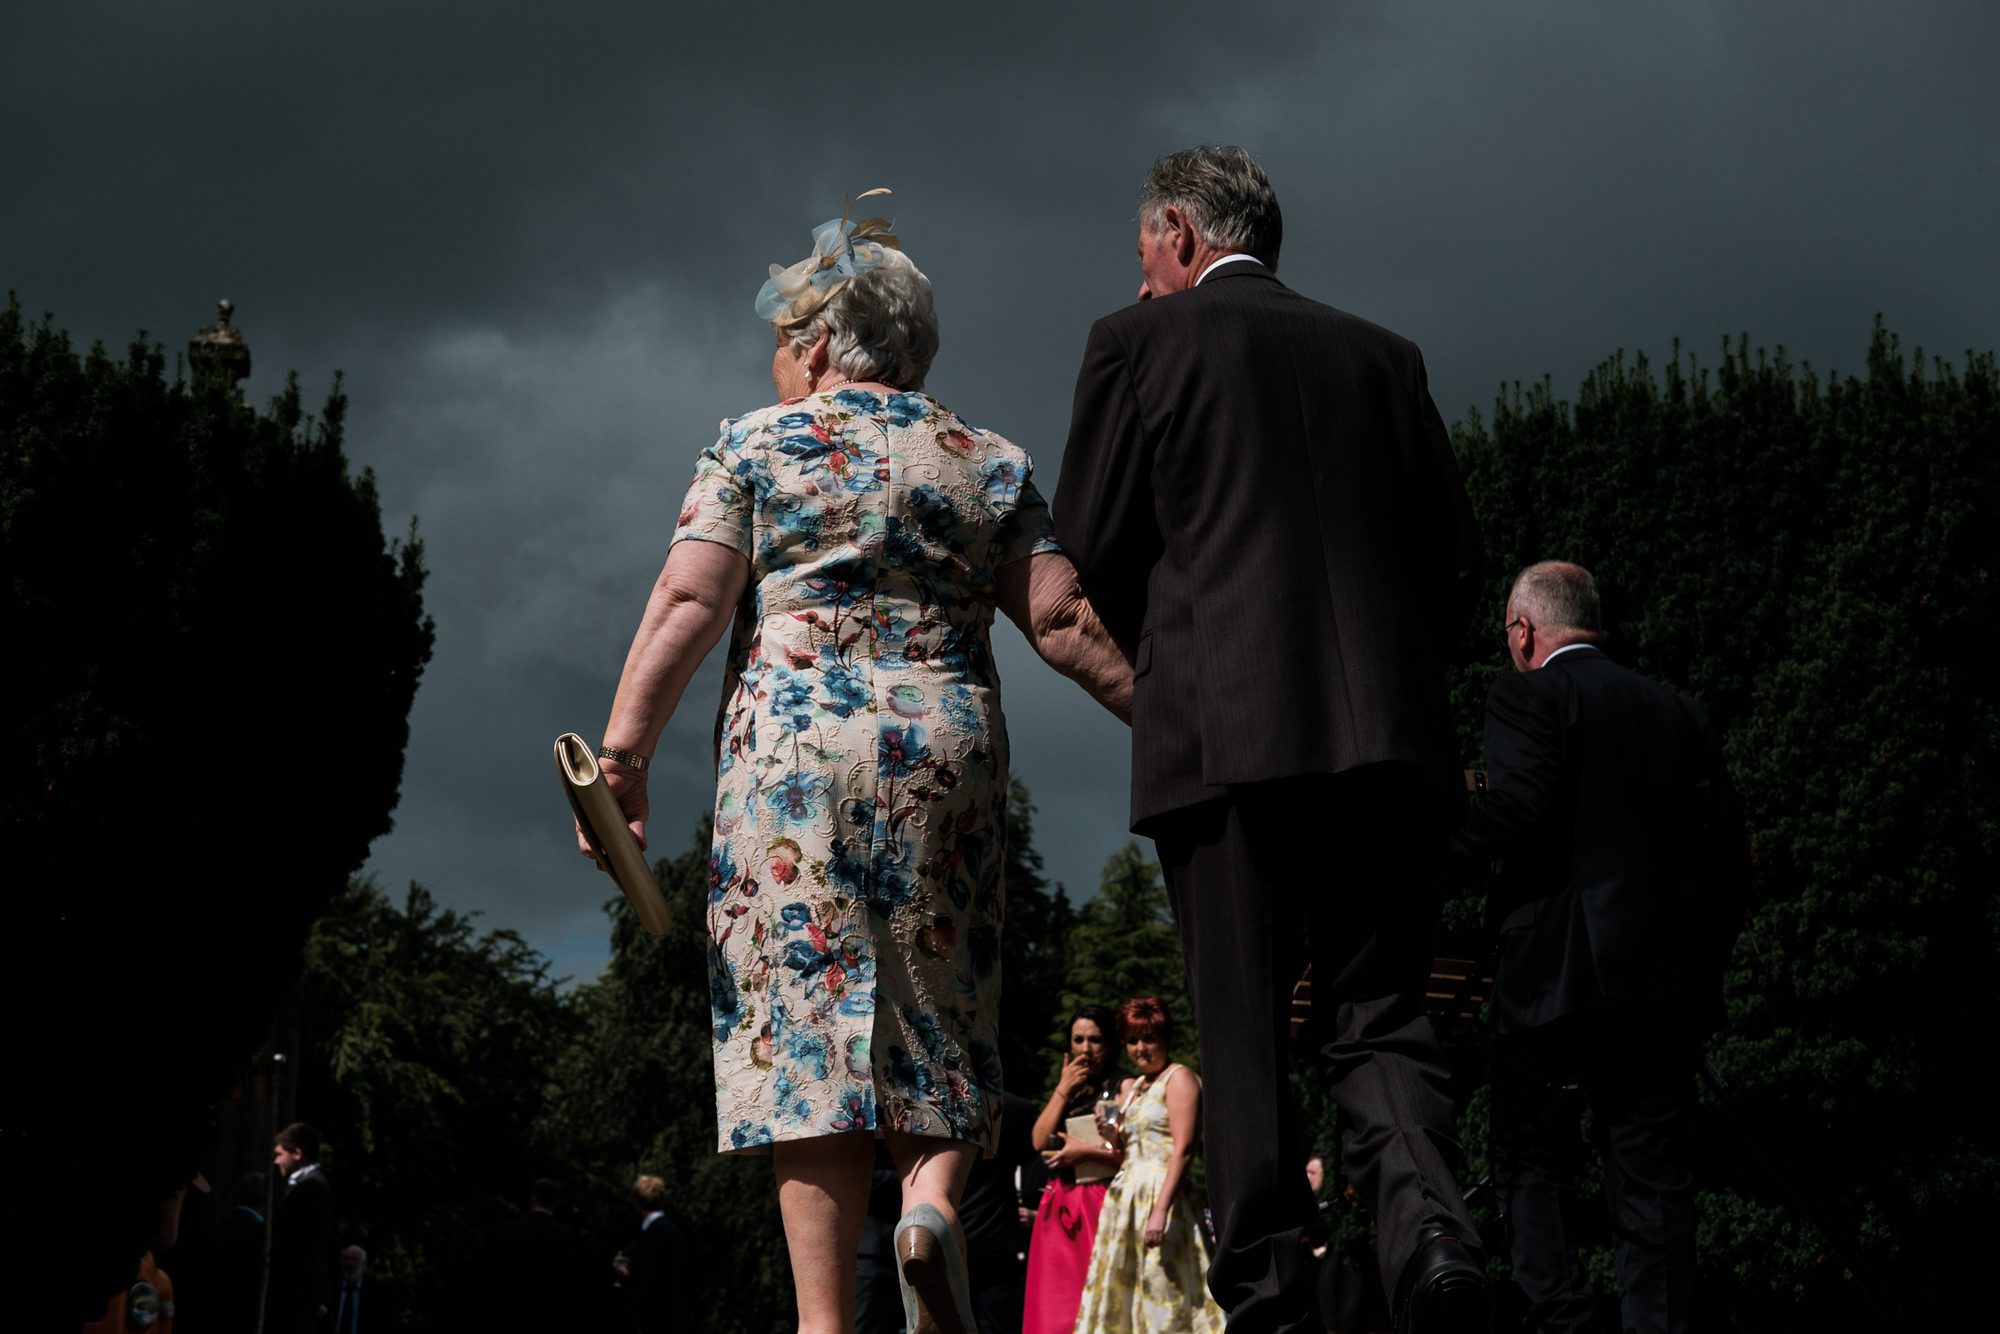 wedding photographer Ireland